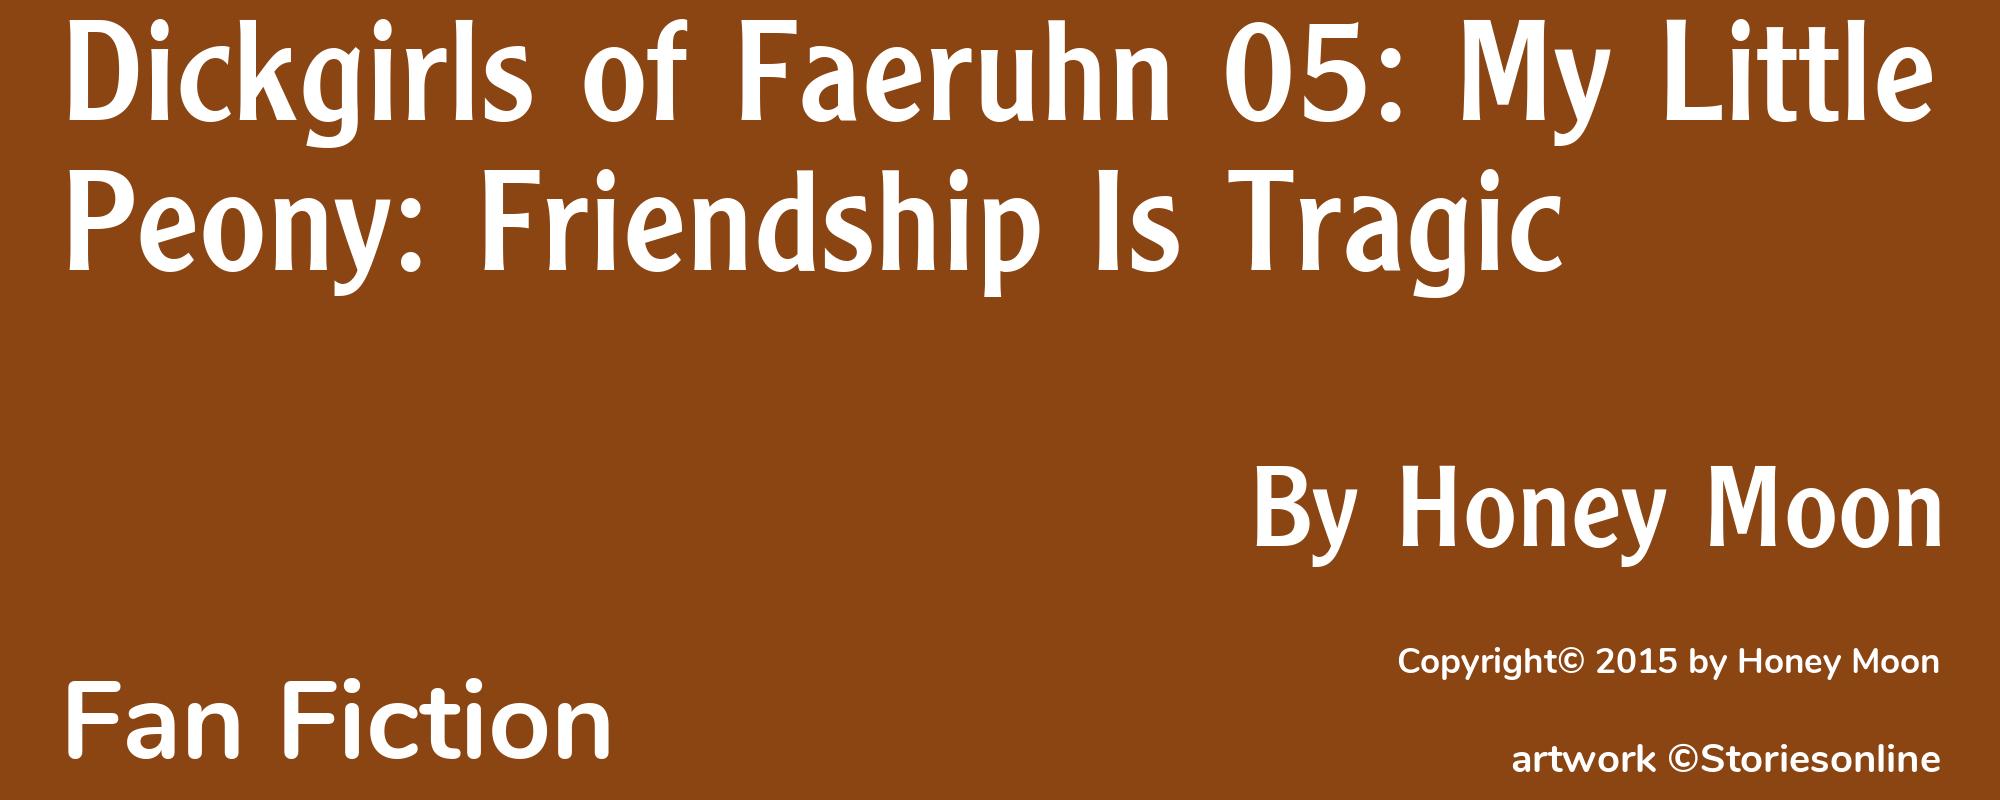 Dickgirls of Faeruhn 05: My Little Peony: Friendship Is Tragic - Cover